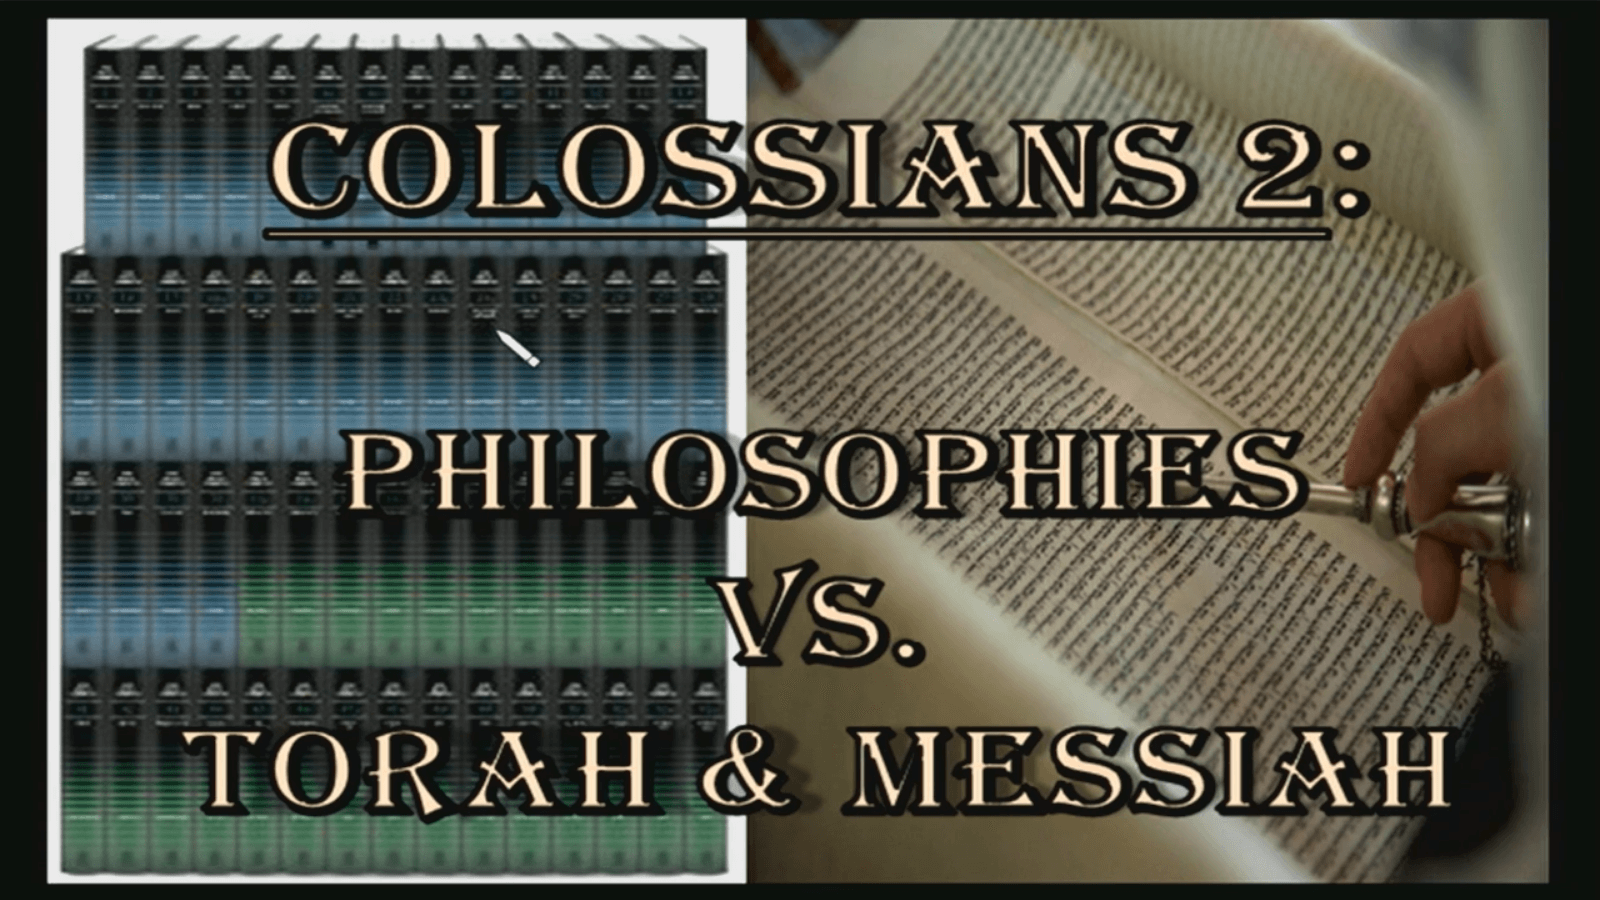 Colossians 2: Philosophies vs. Torah & Messiah